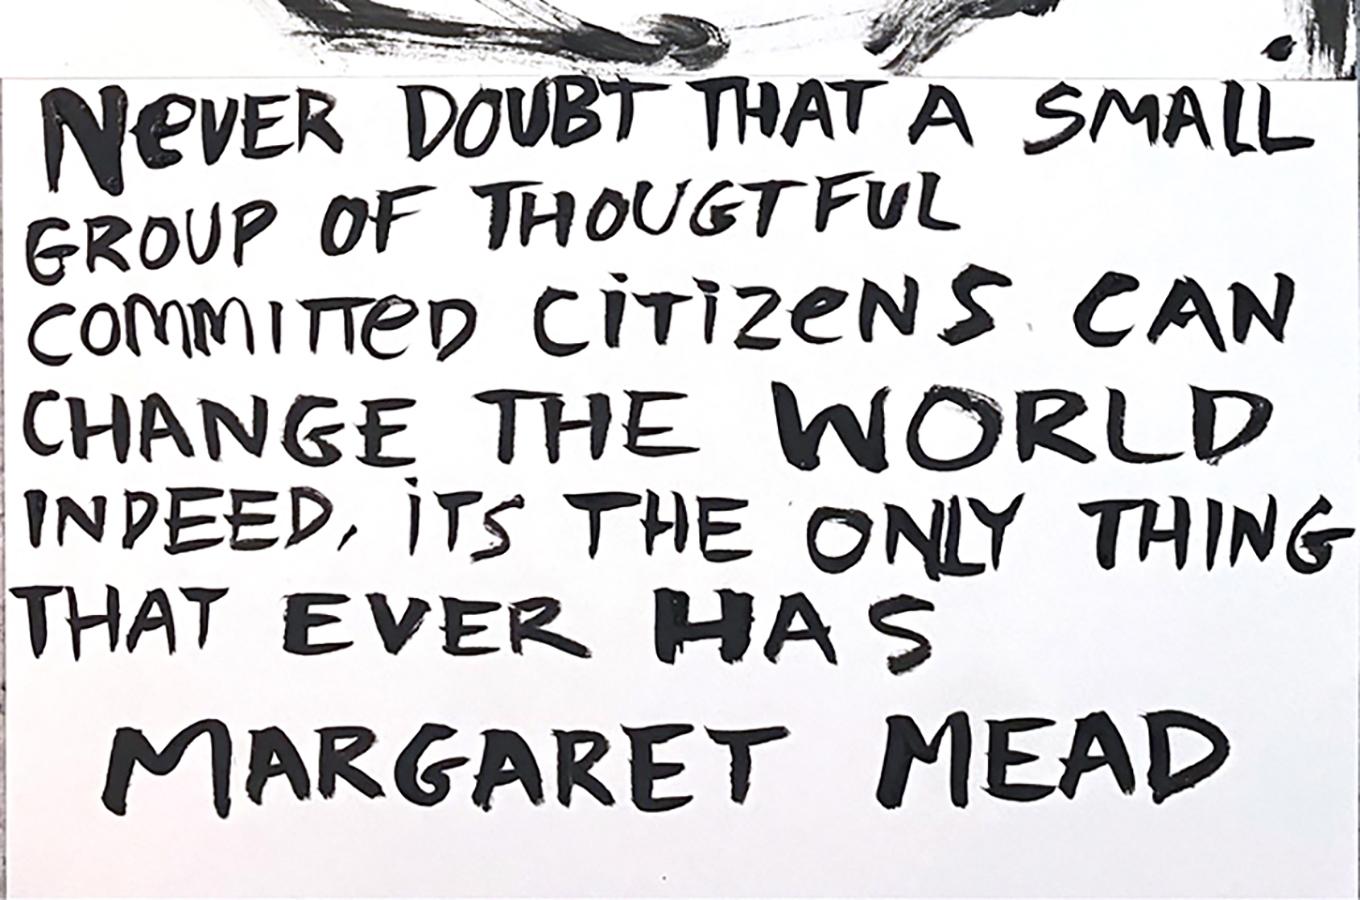 Margaret Mead, America Martin_Ink on Paper - partie de la vente à l'ACLU/NAACP en vente 2